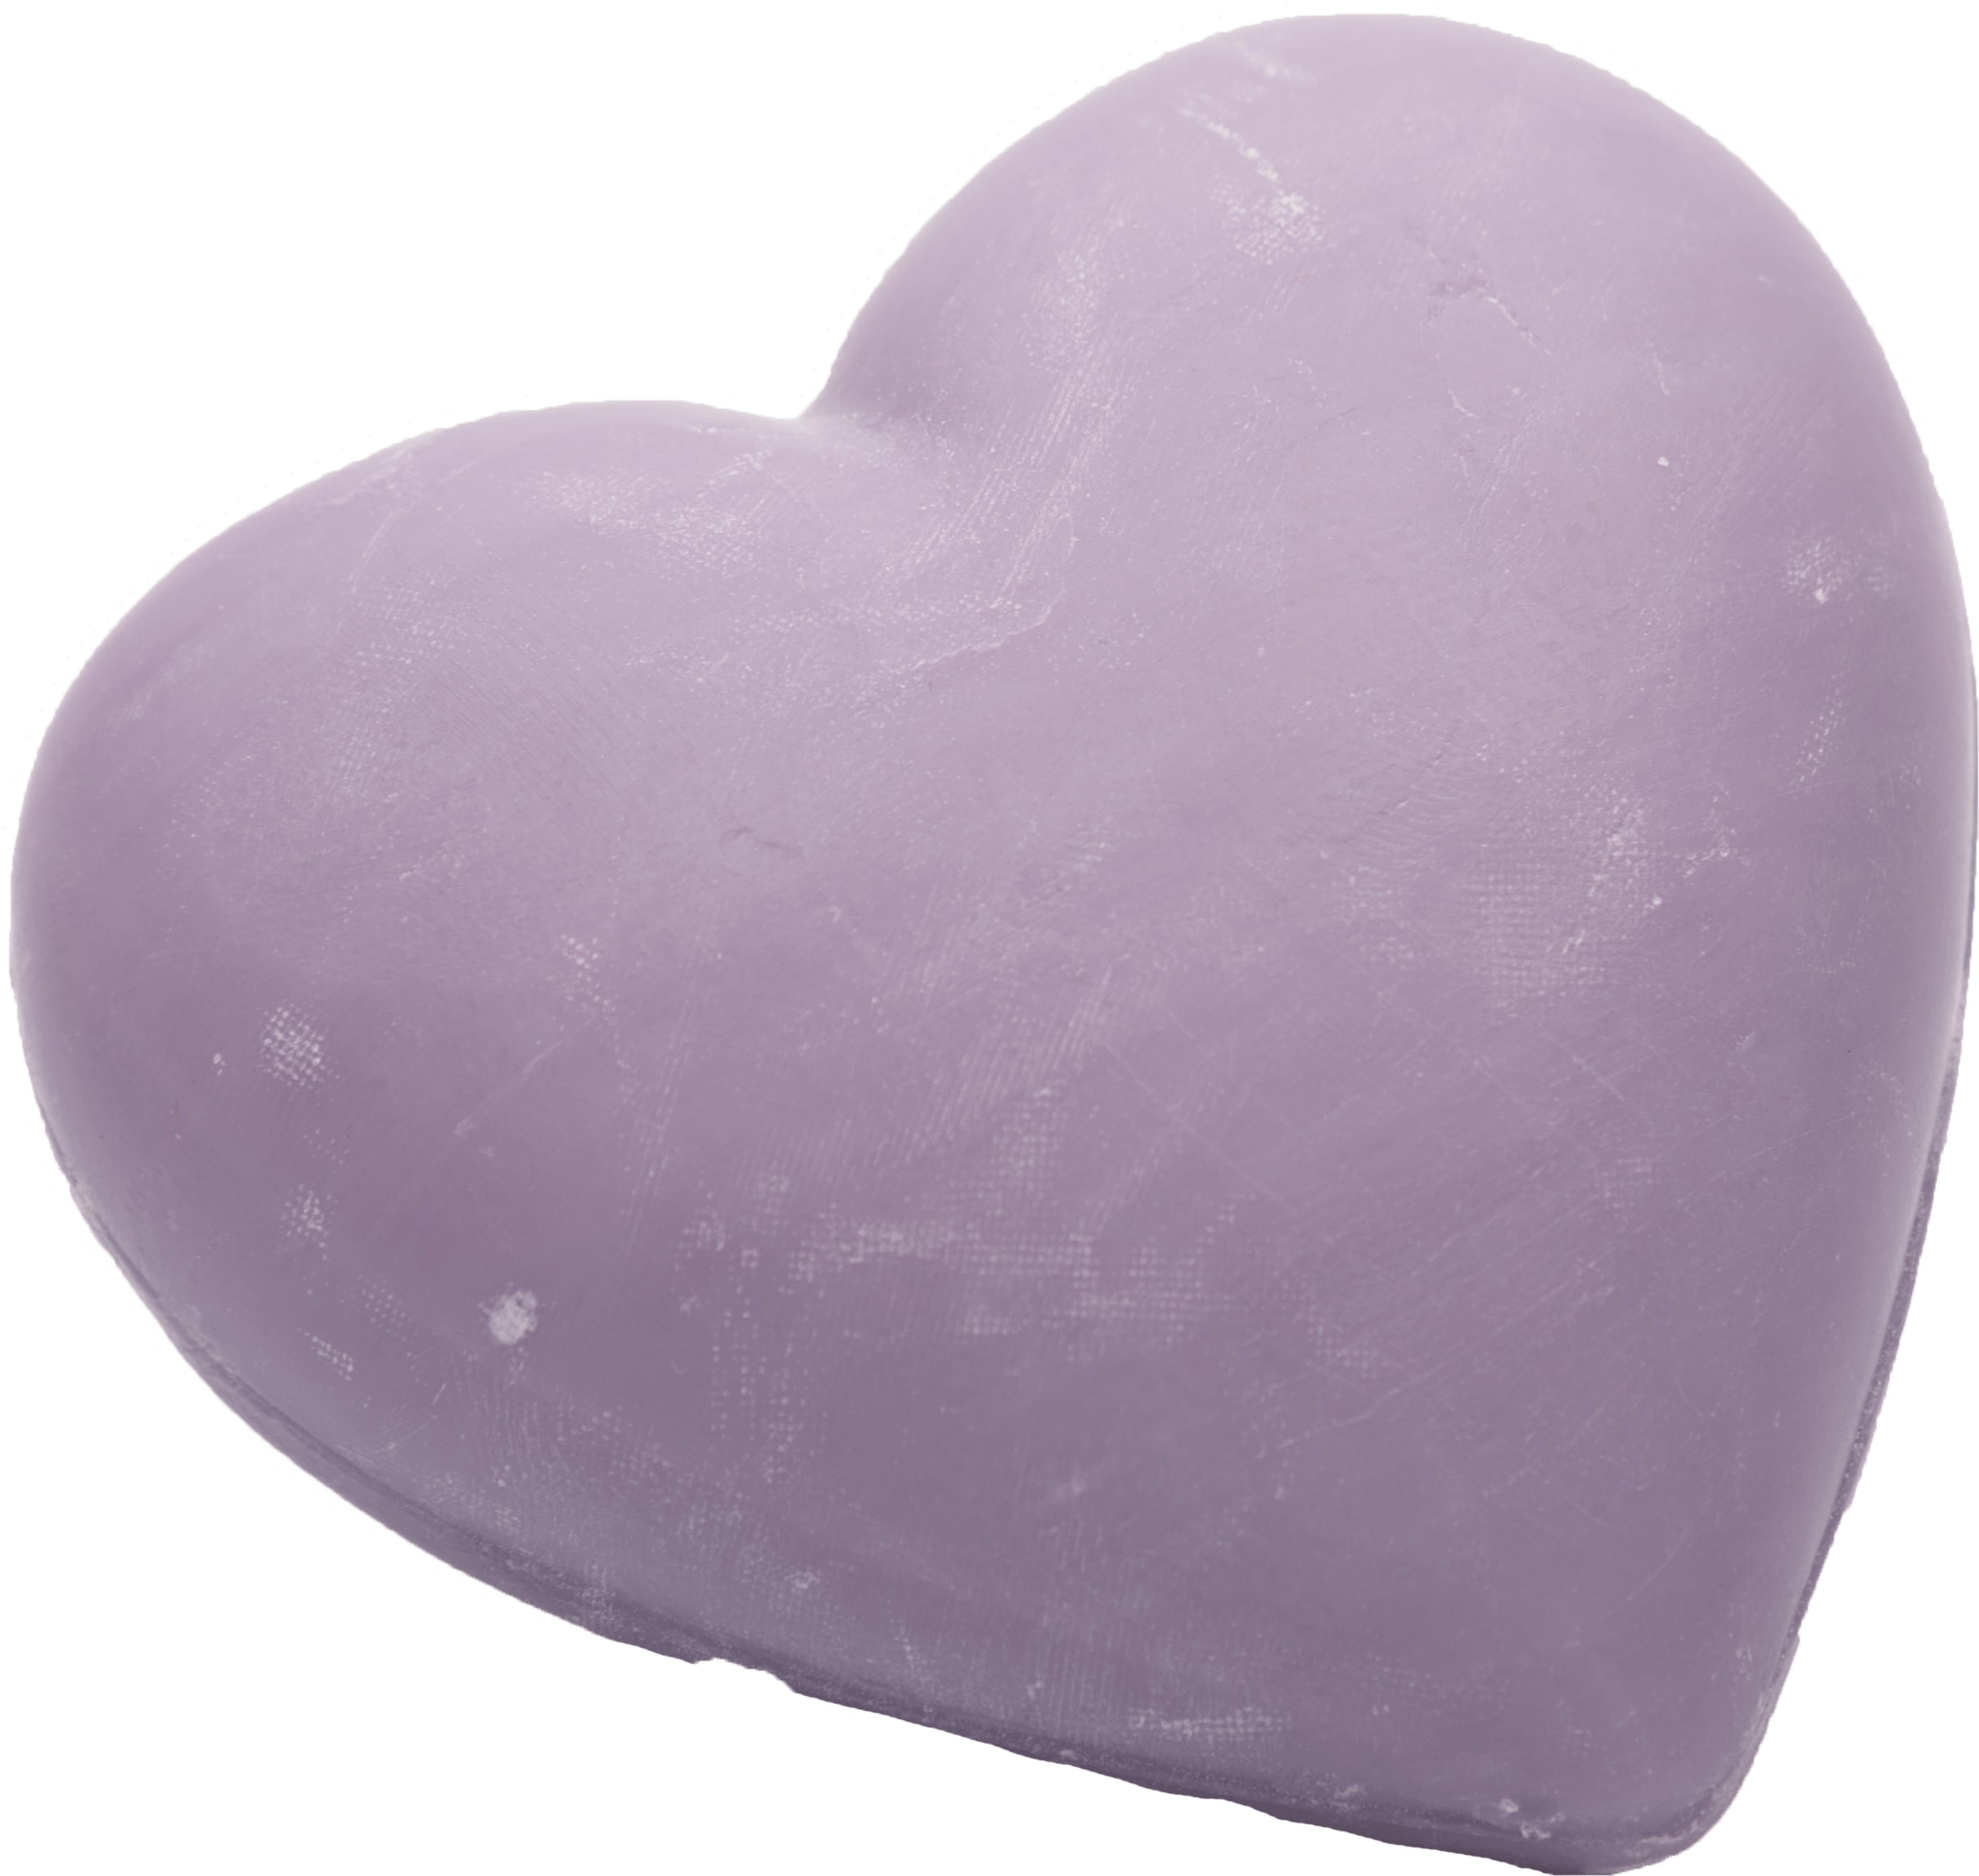 Seife in Herzform 25g - Lavendel